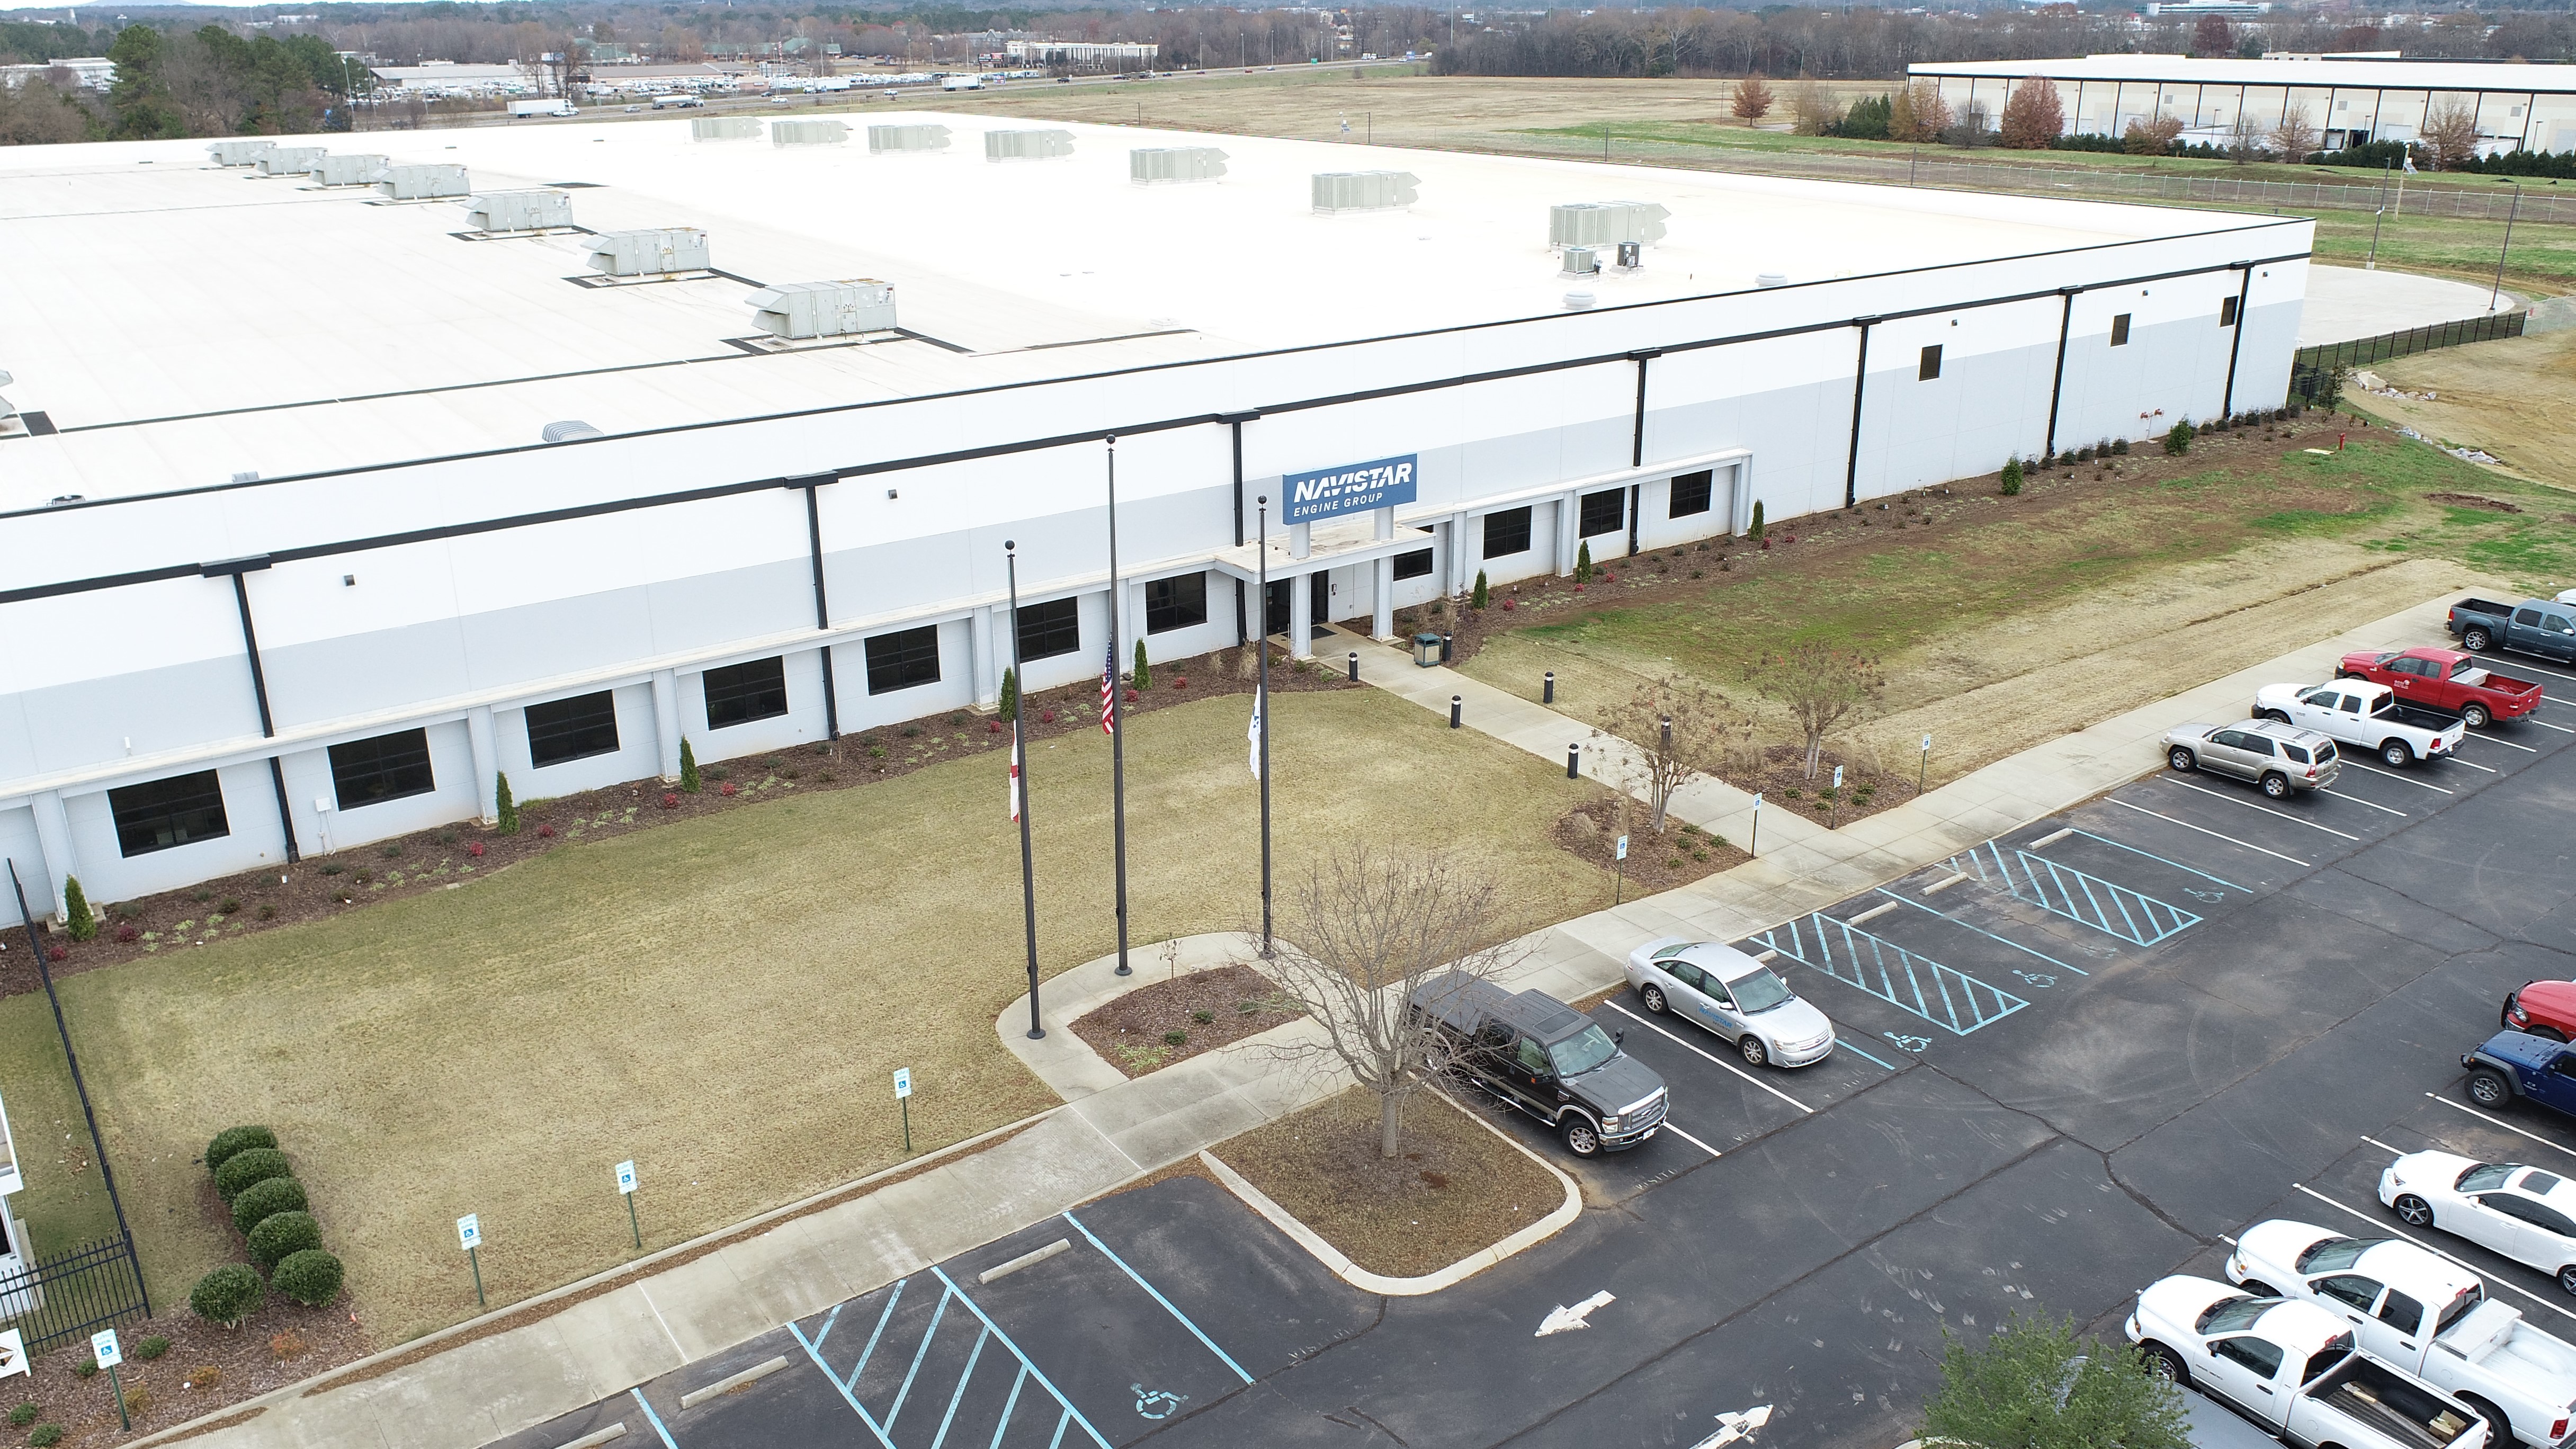 Aerial view of Navistar engine plant in Huntsville, Alabama